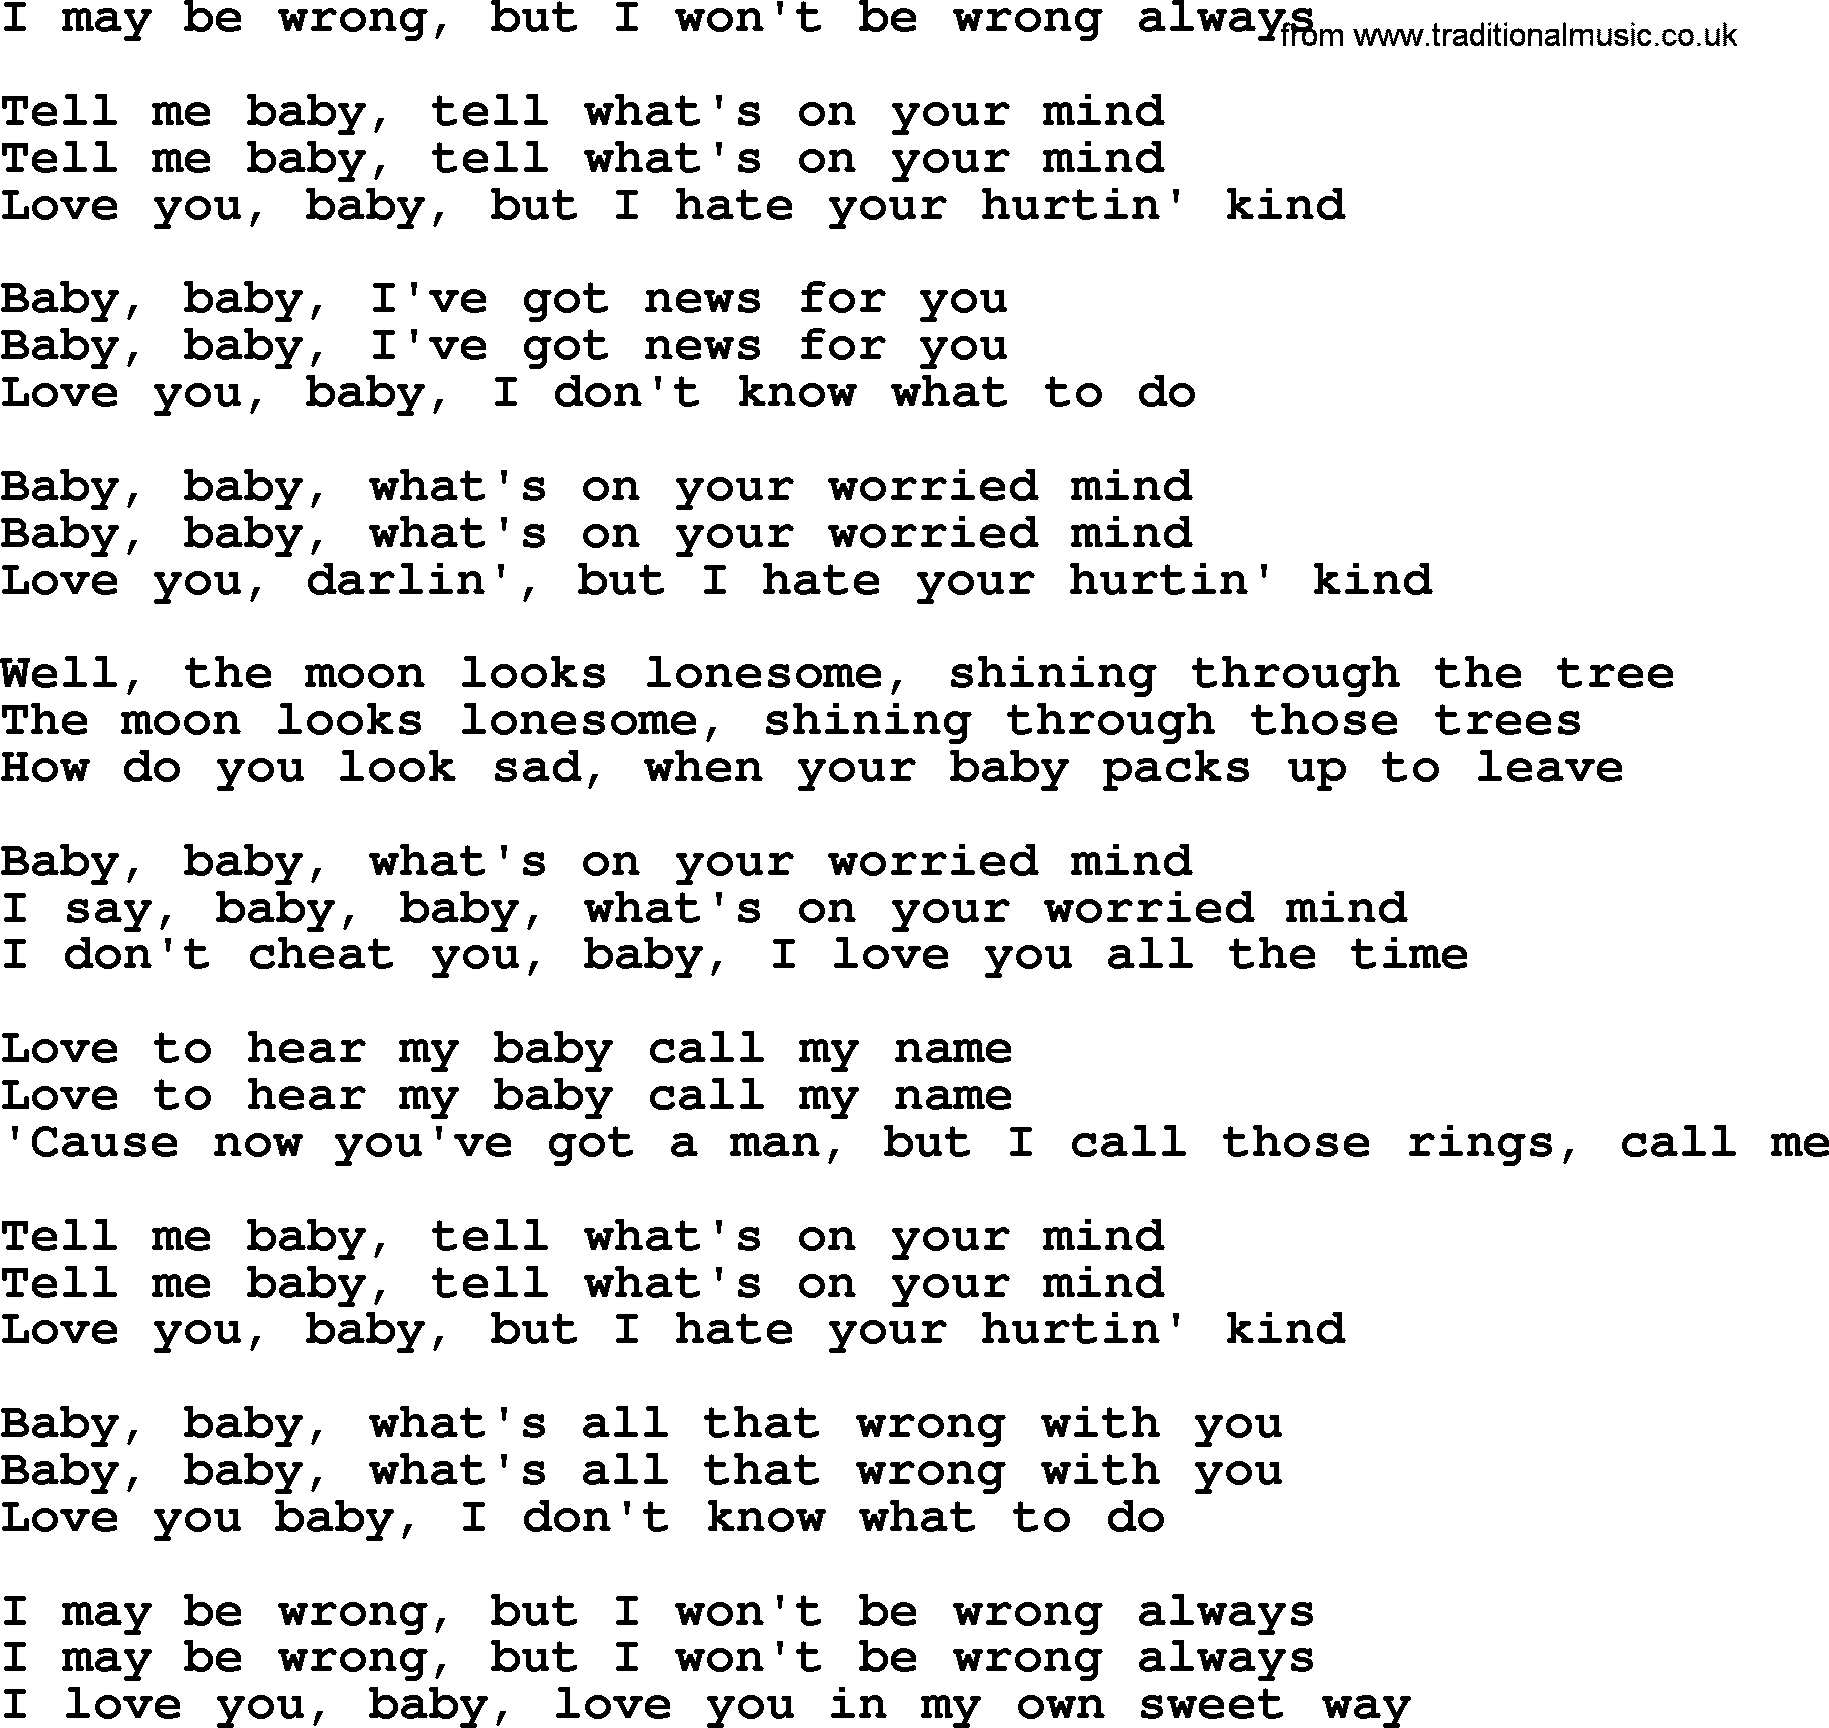 The Byrds song I May Be Wrong, But I Won't Be Wrong Always, lyrics